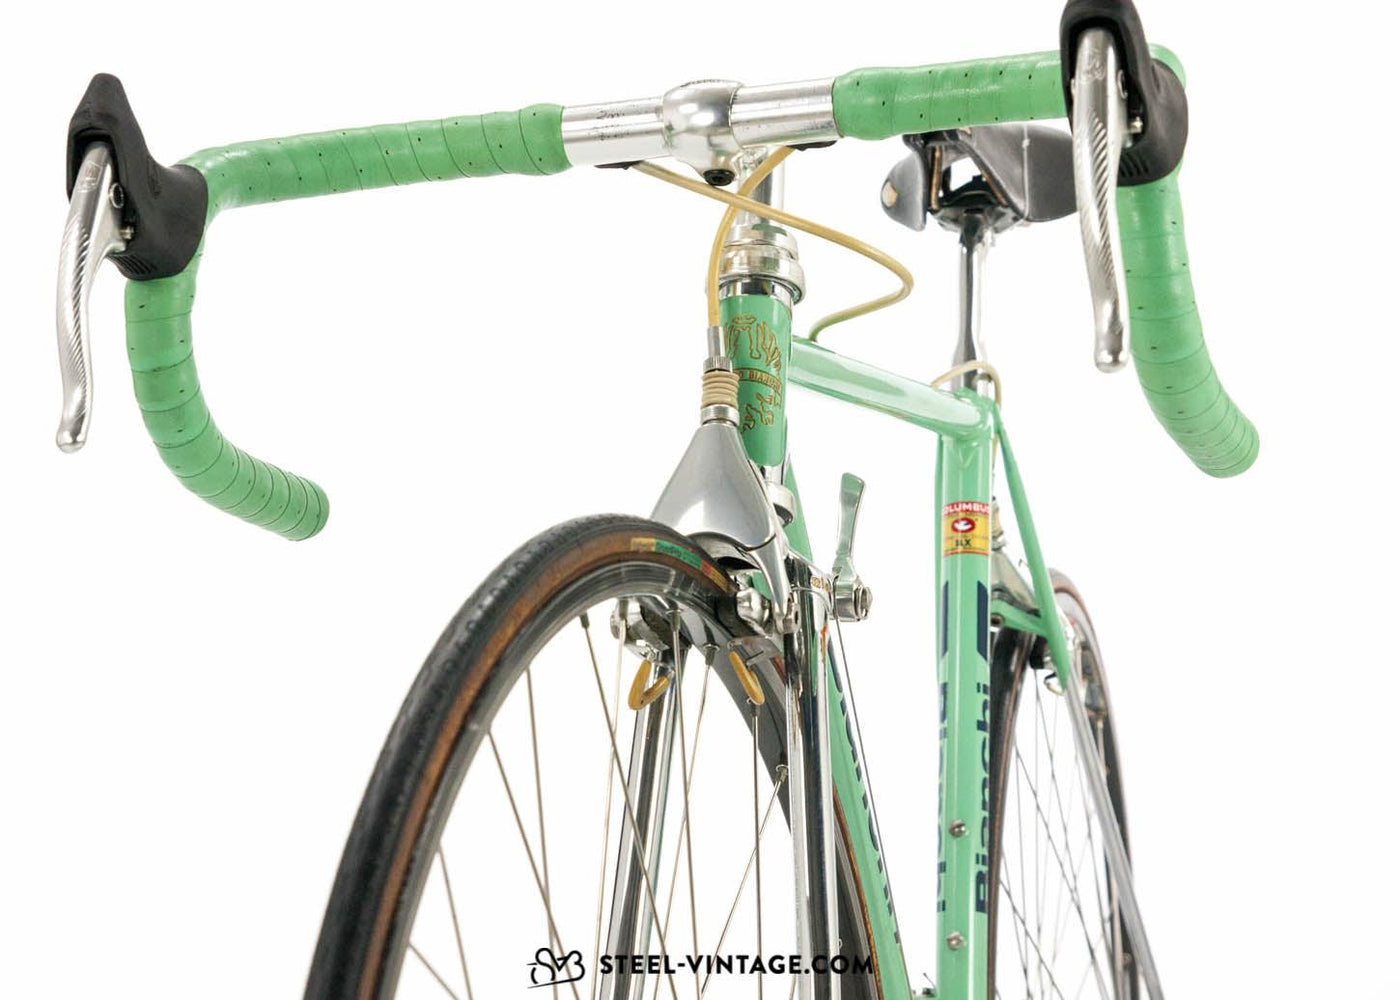 Bianchi Specialissima X4 Classic Road Bike 1986 - Steel Vintage Bikes